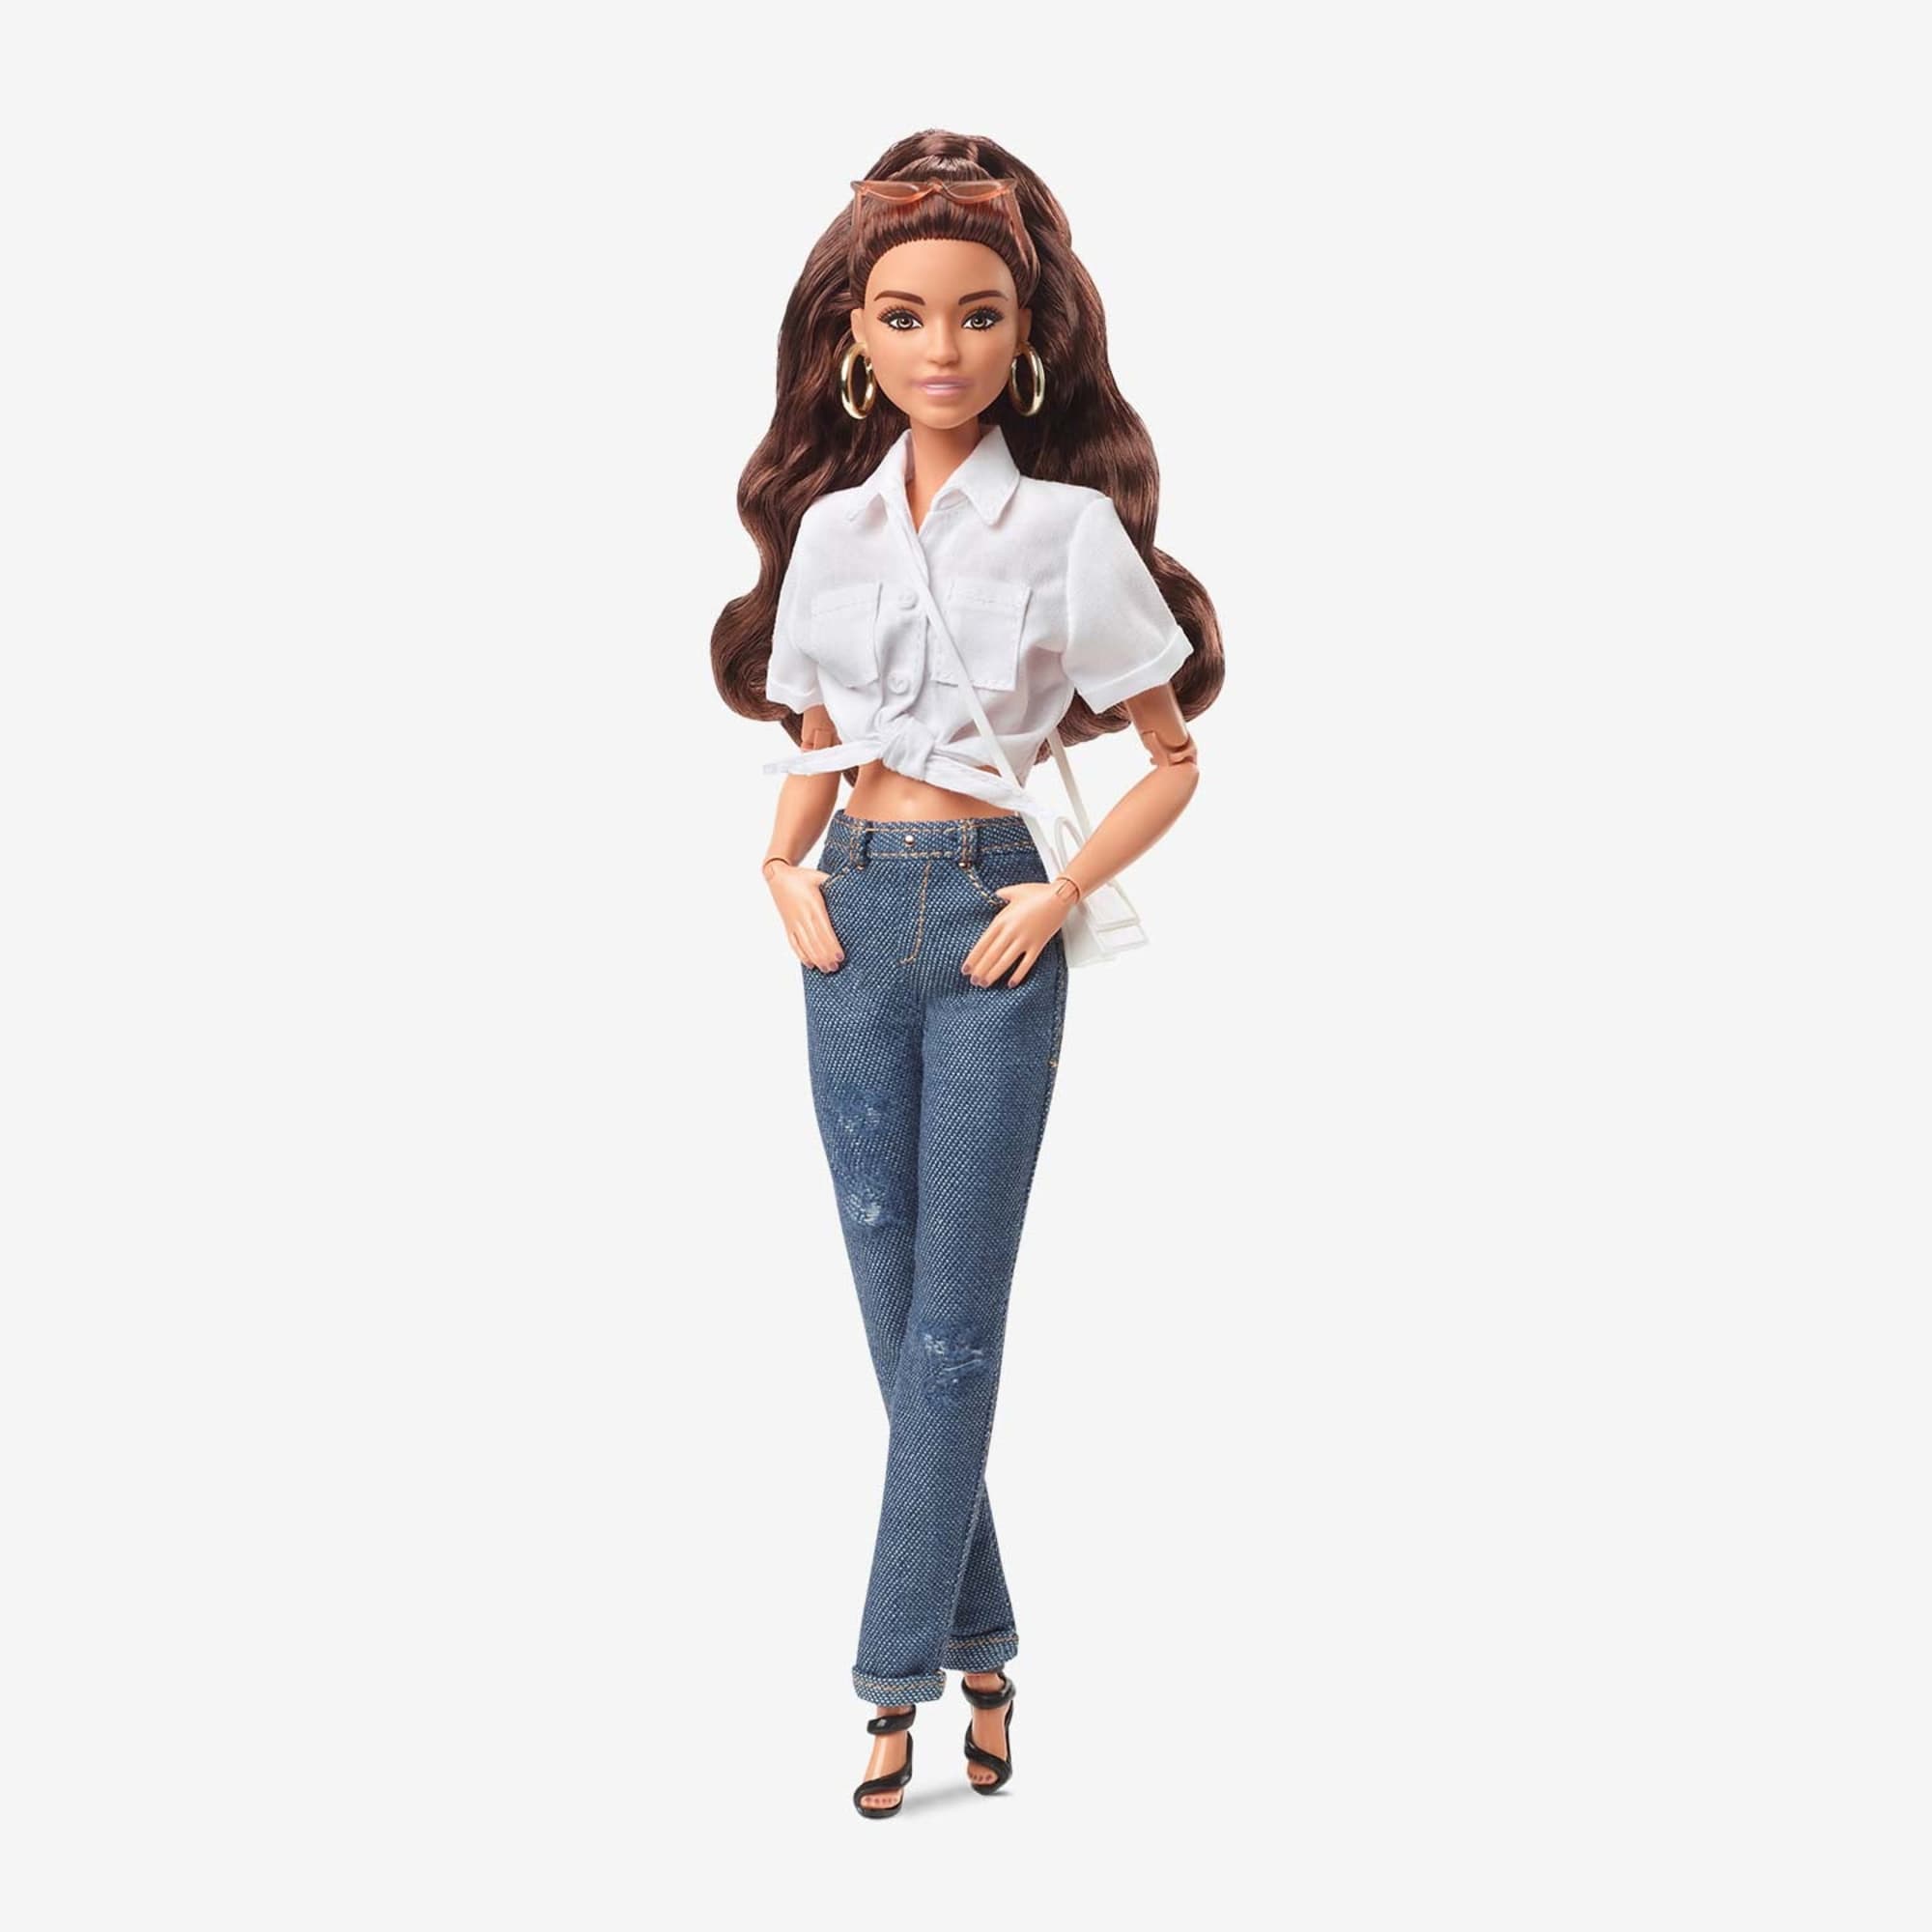 Barbie @BarbieStyle Doll 4 – Mattel Creations